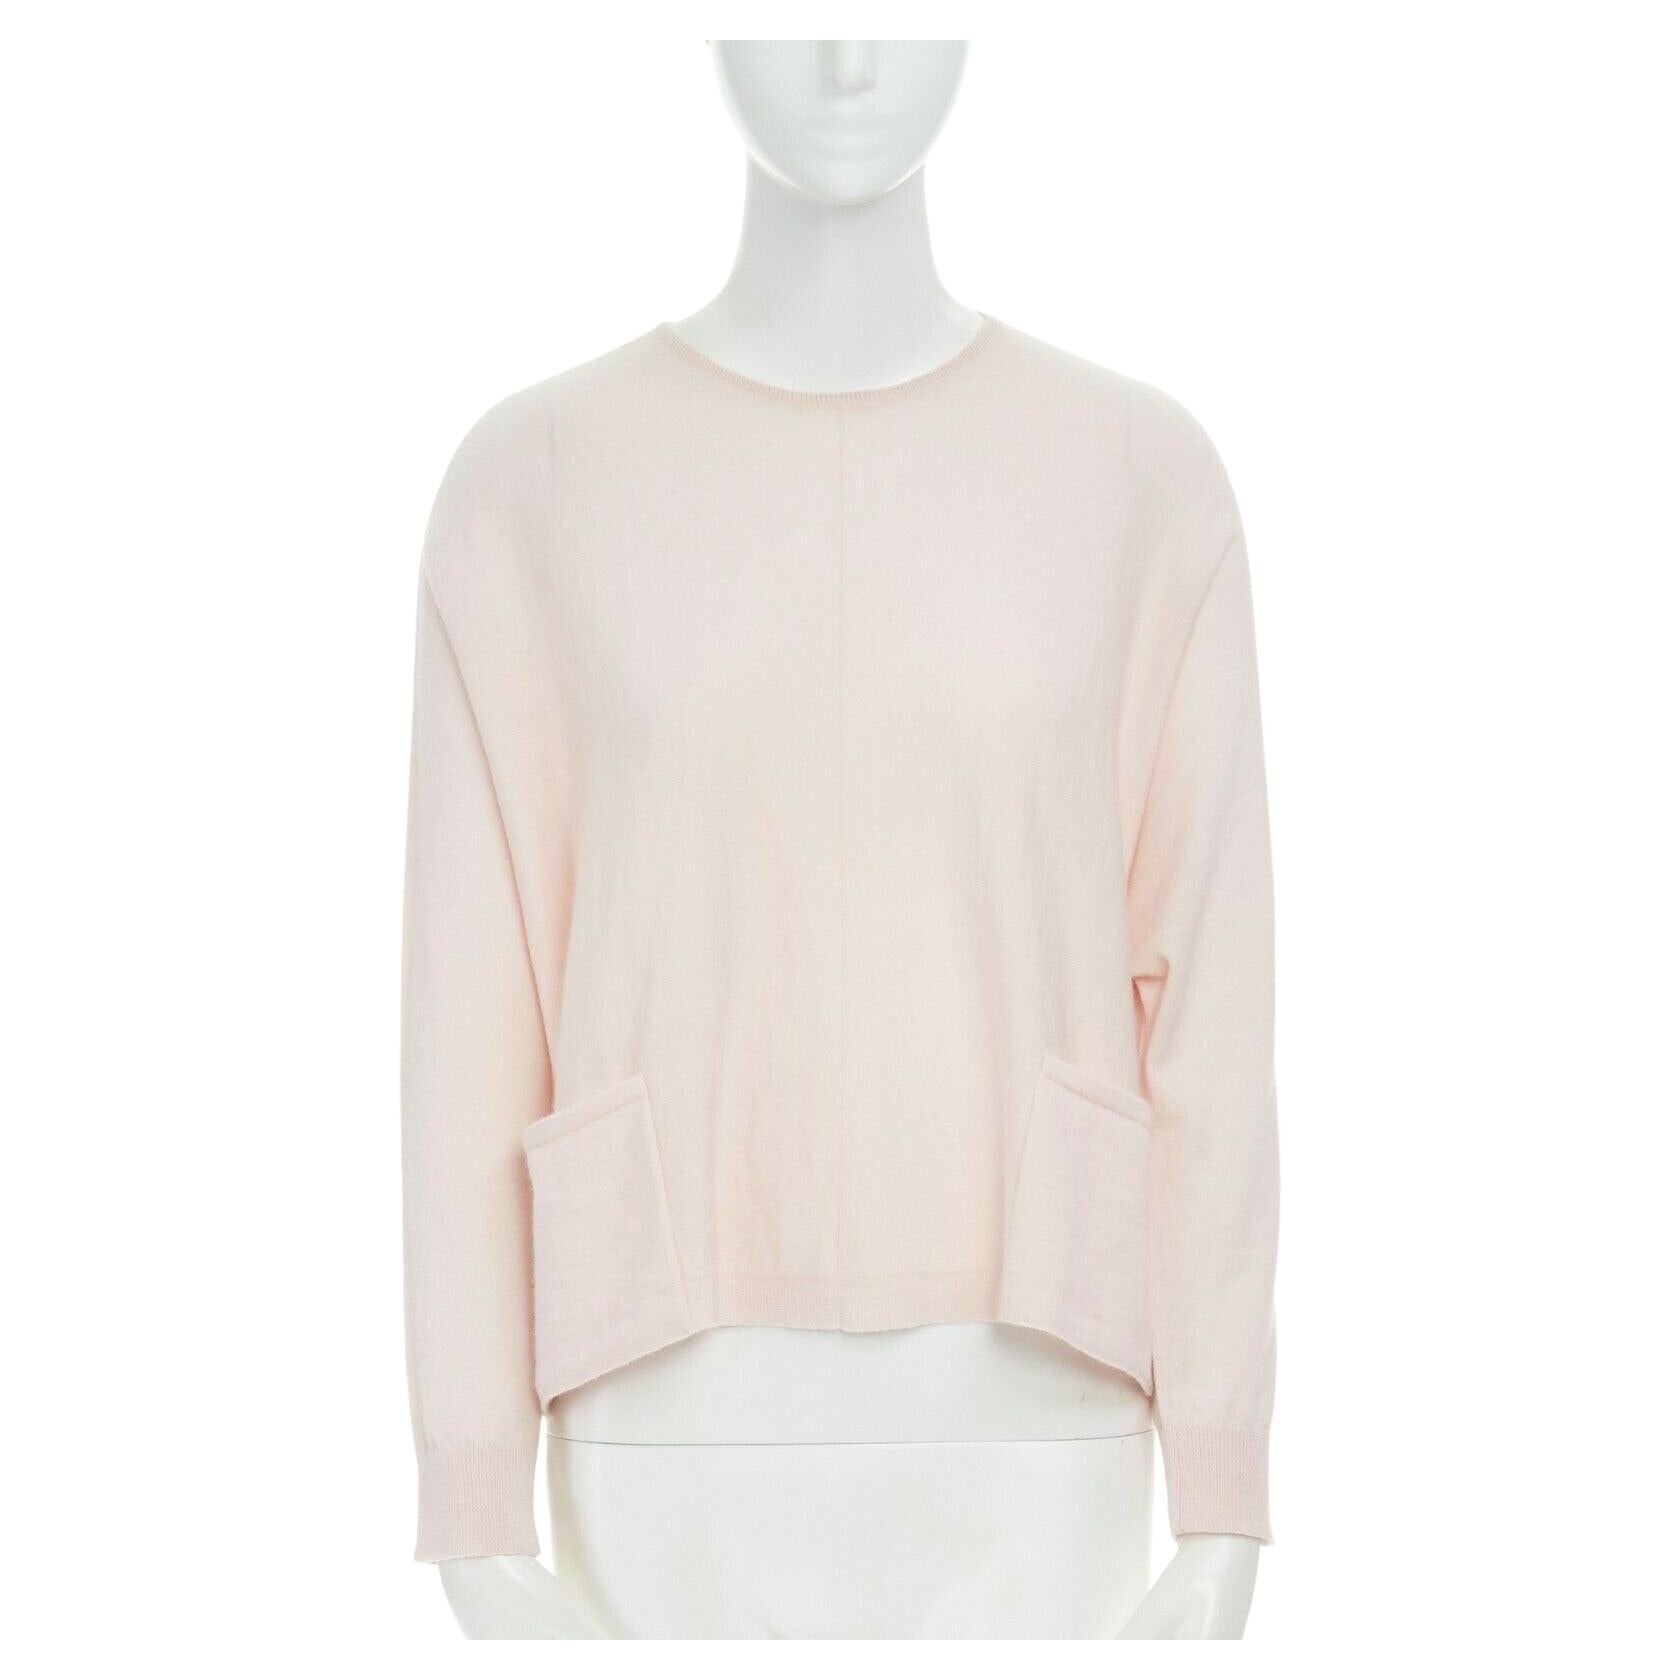 ANTEPRIMA 100% cashmere light pink dual pocket long sleeve boxy sweater top IT38